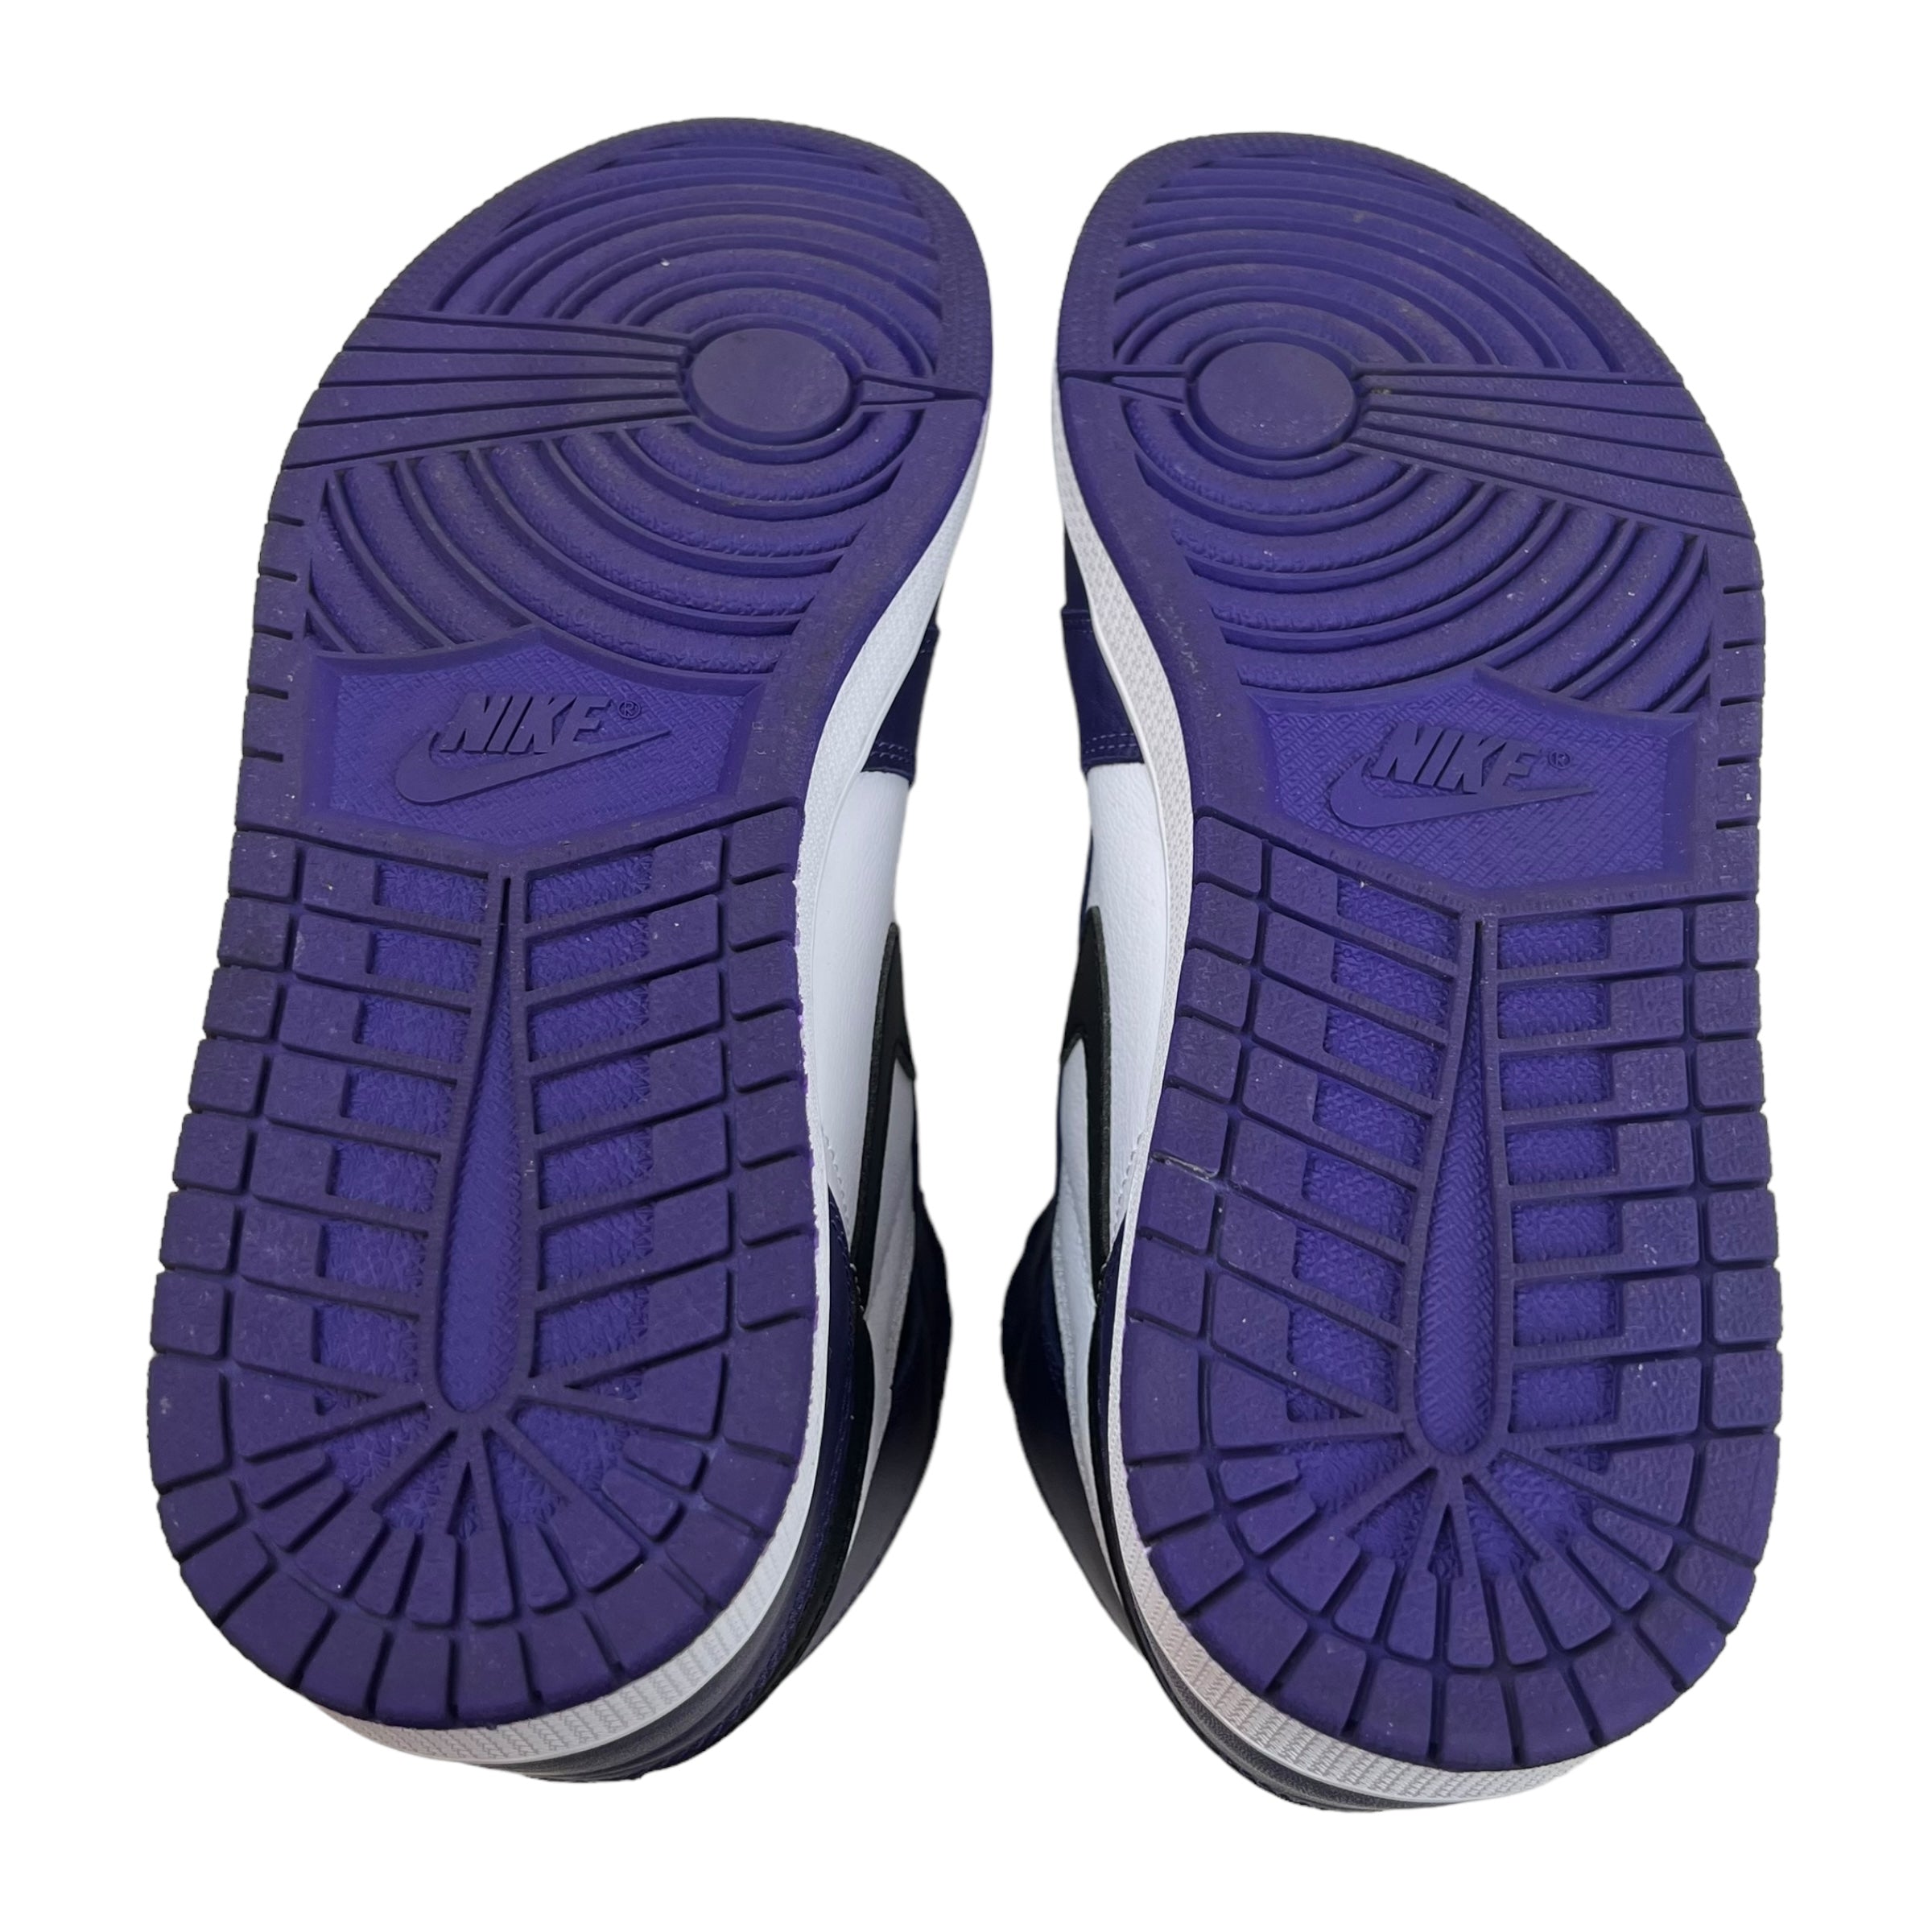 Air Jordan 1 Court Purple (Used)